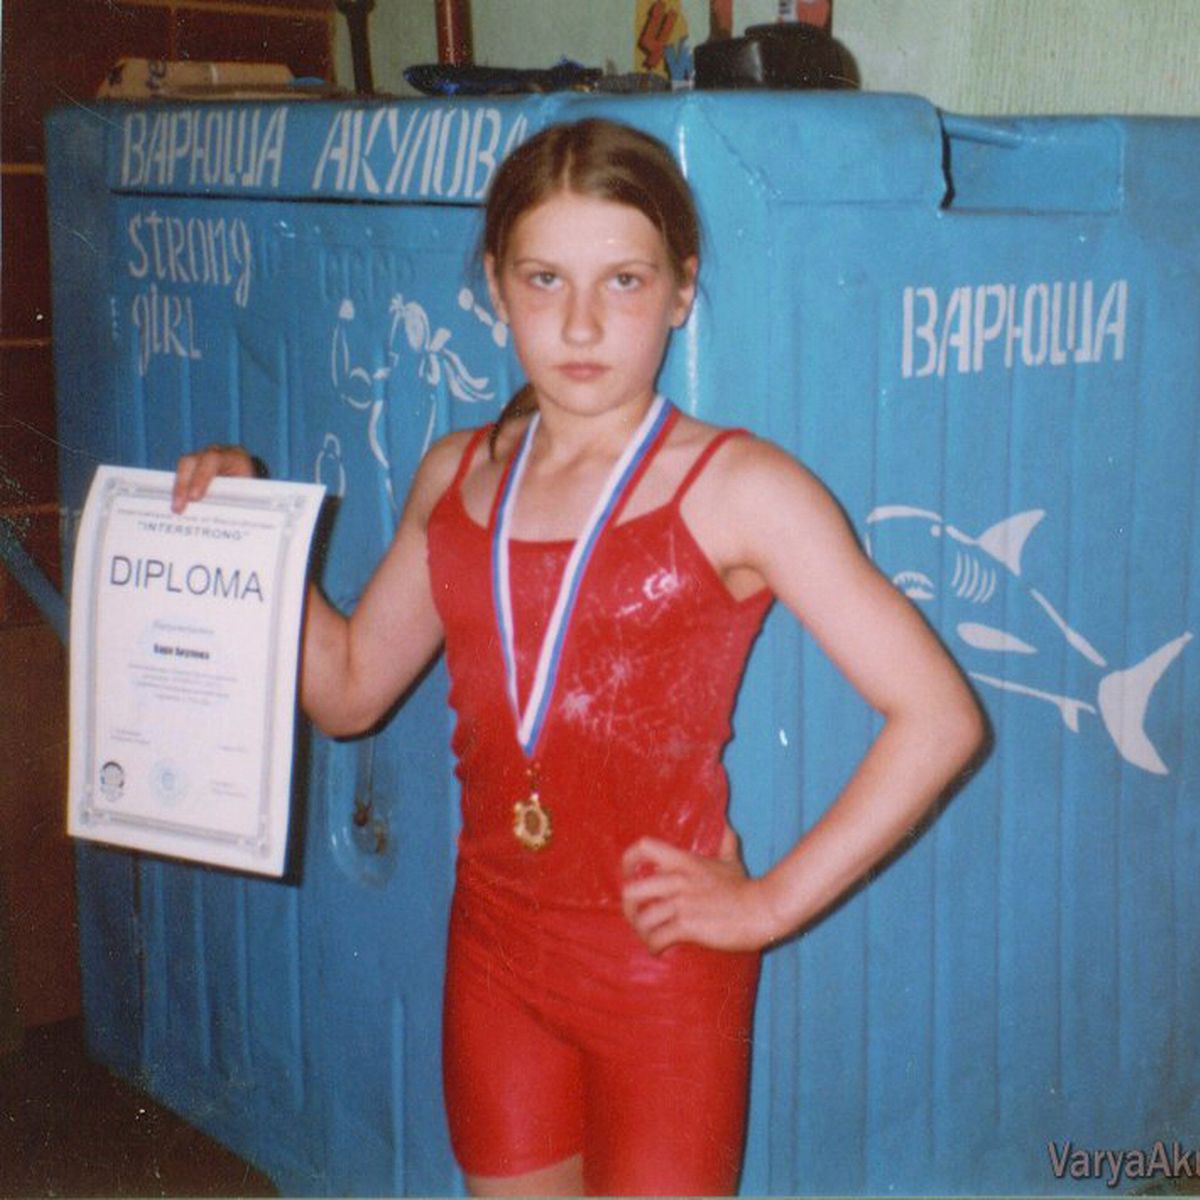 Varya Akulova -Strongest Kids In The World